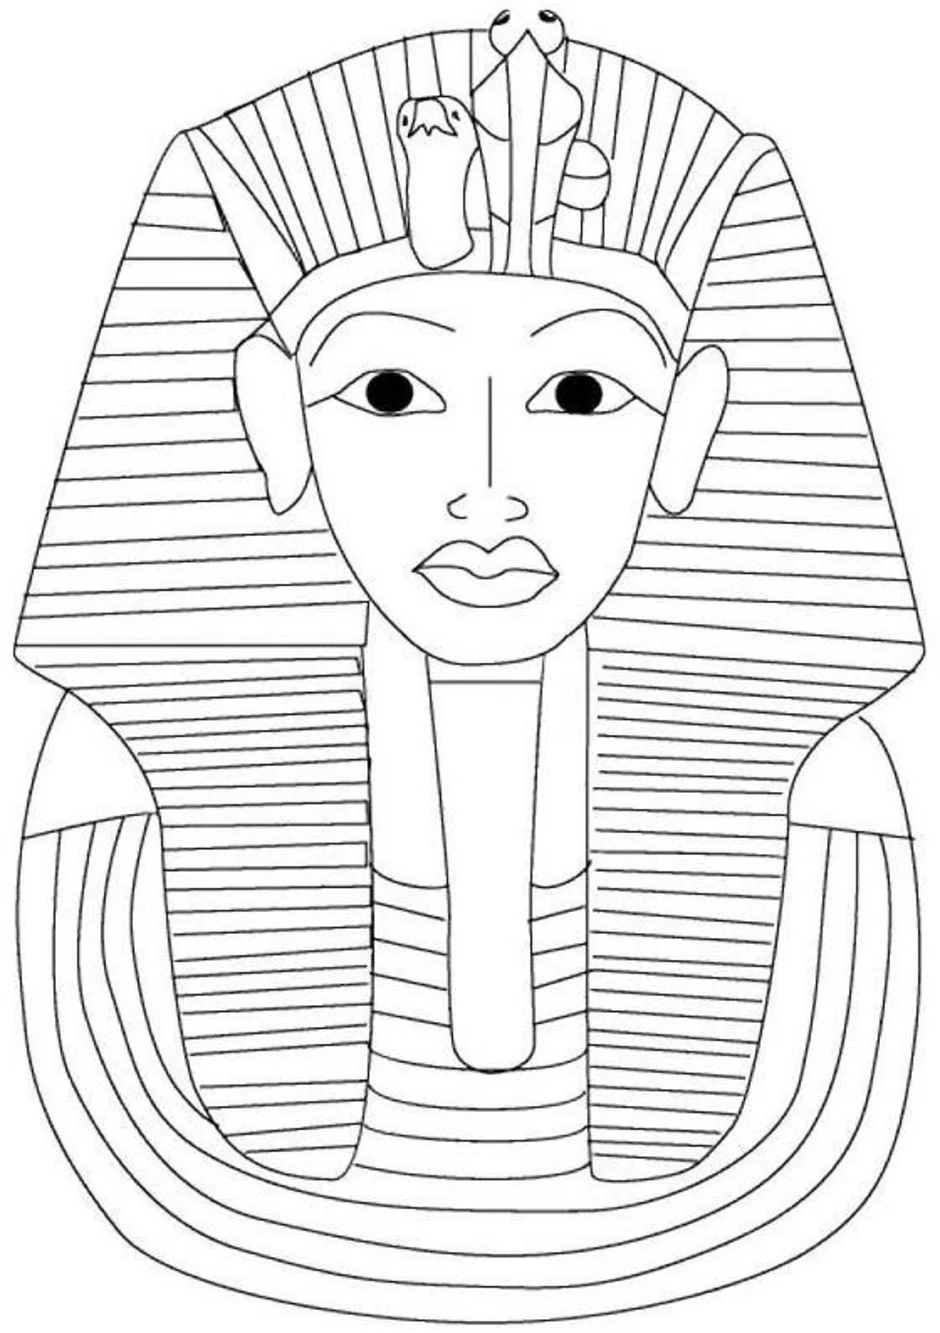 Маска фараона рисунок 5. Маска фараона Тутанхамона. Маска фараона Тутанхамона рисунок. Маска фараона Тутанхамона изо 5. Маска Тутанхамона рисунок 5 класс.